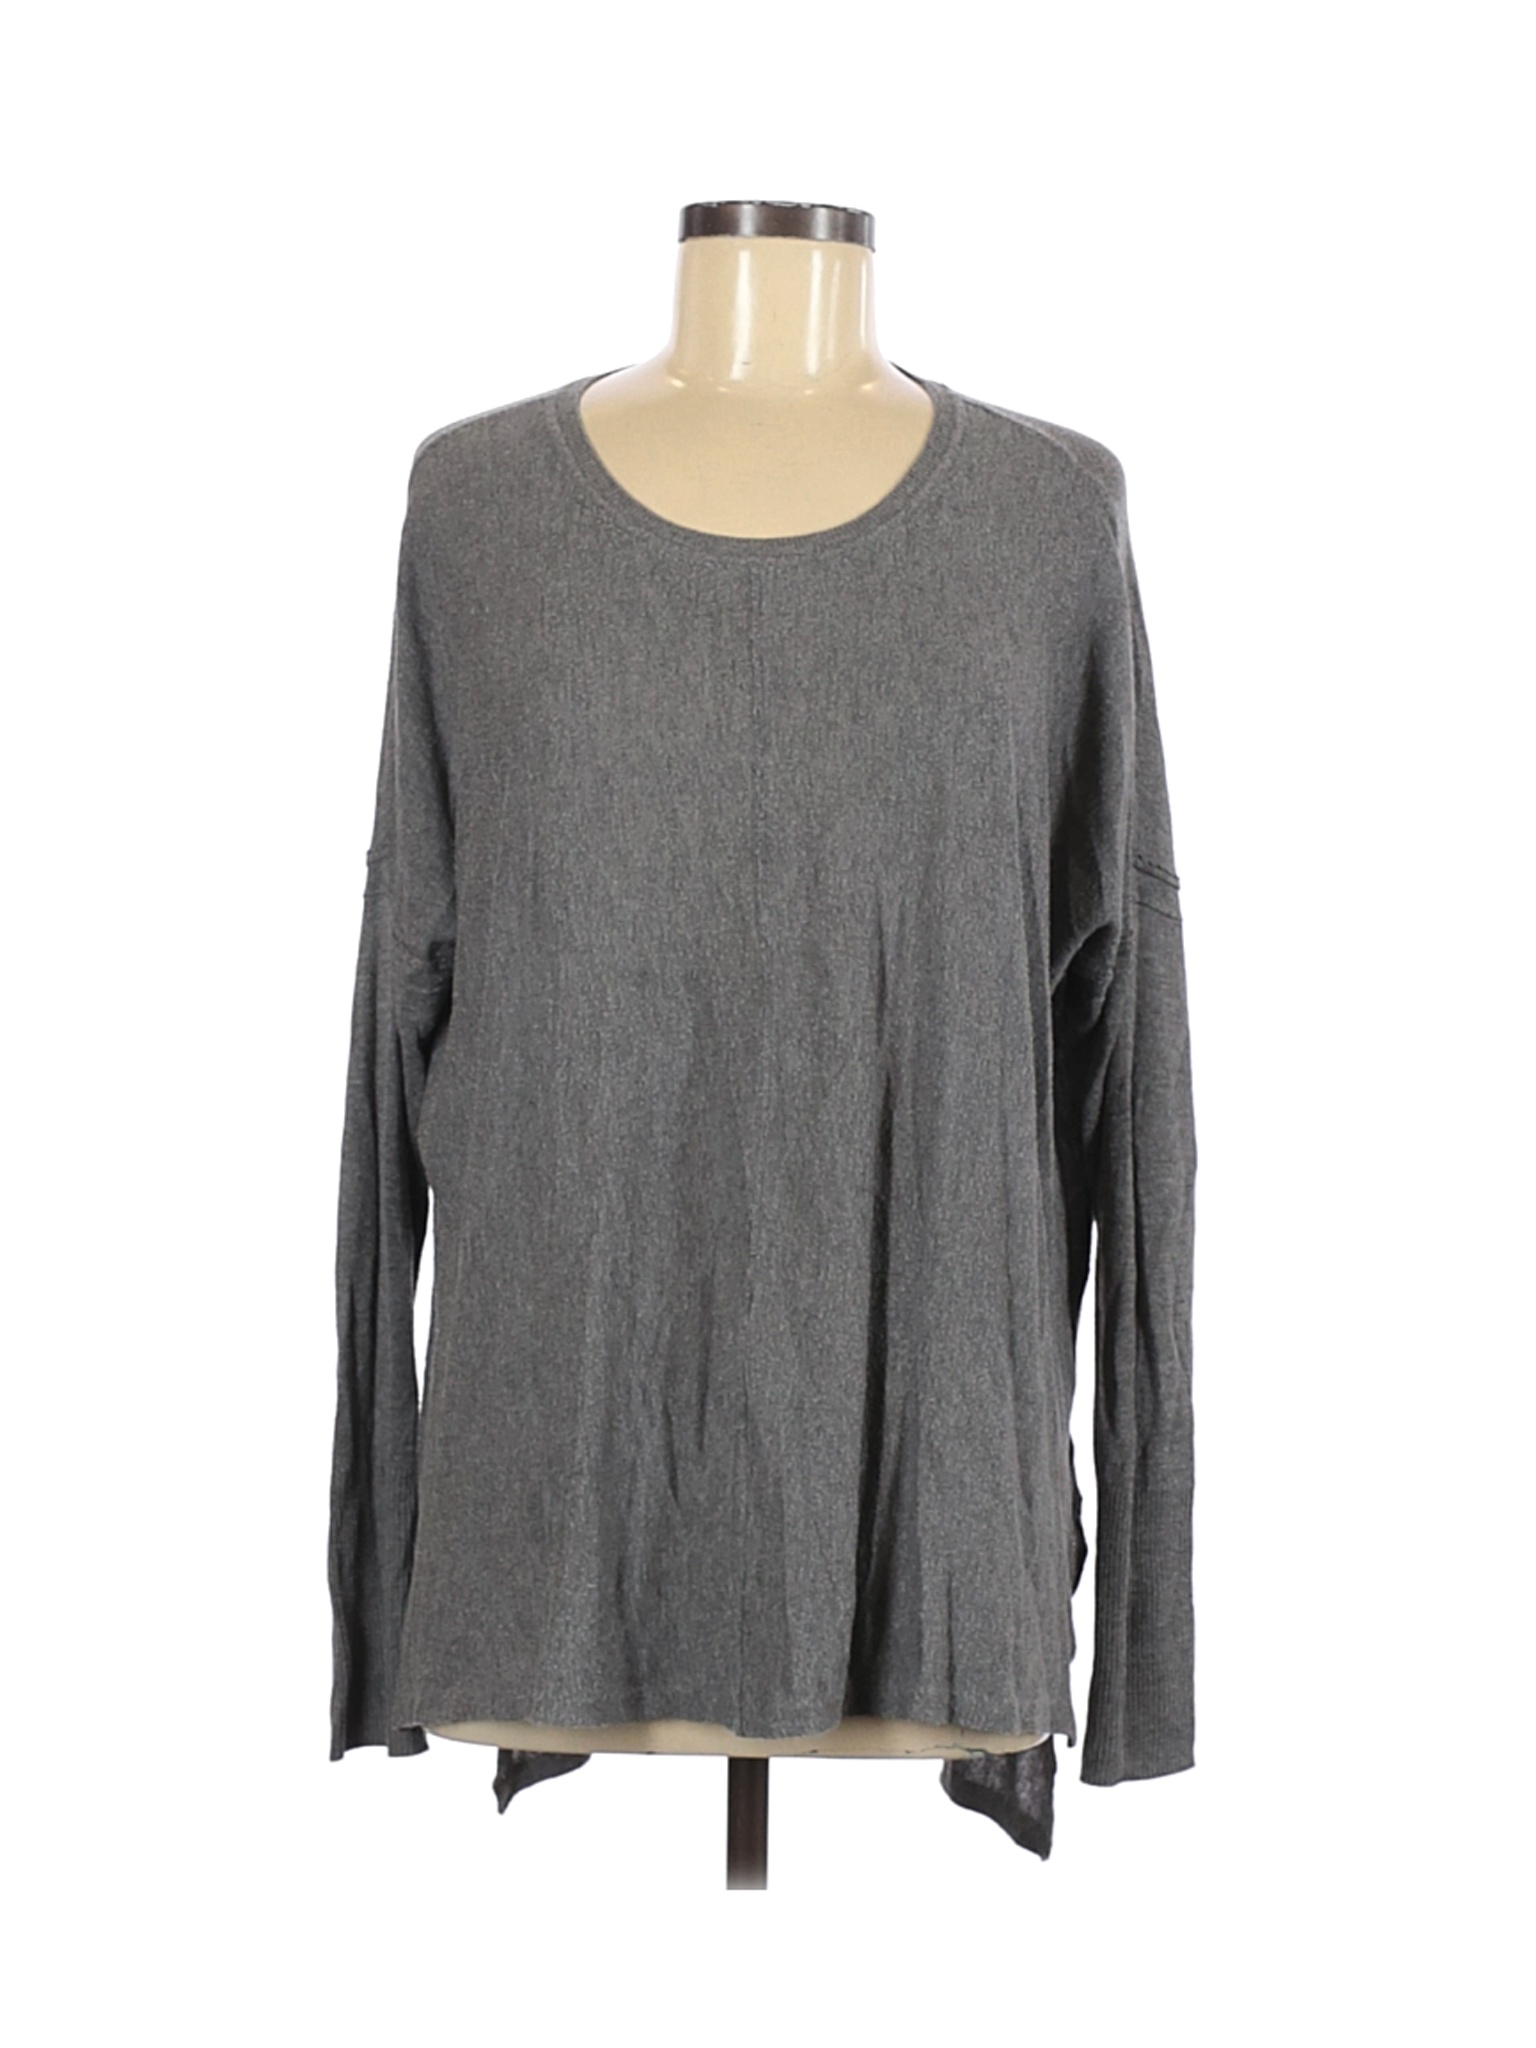 H&M Women Gray Long Sleeve Top M | eBay